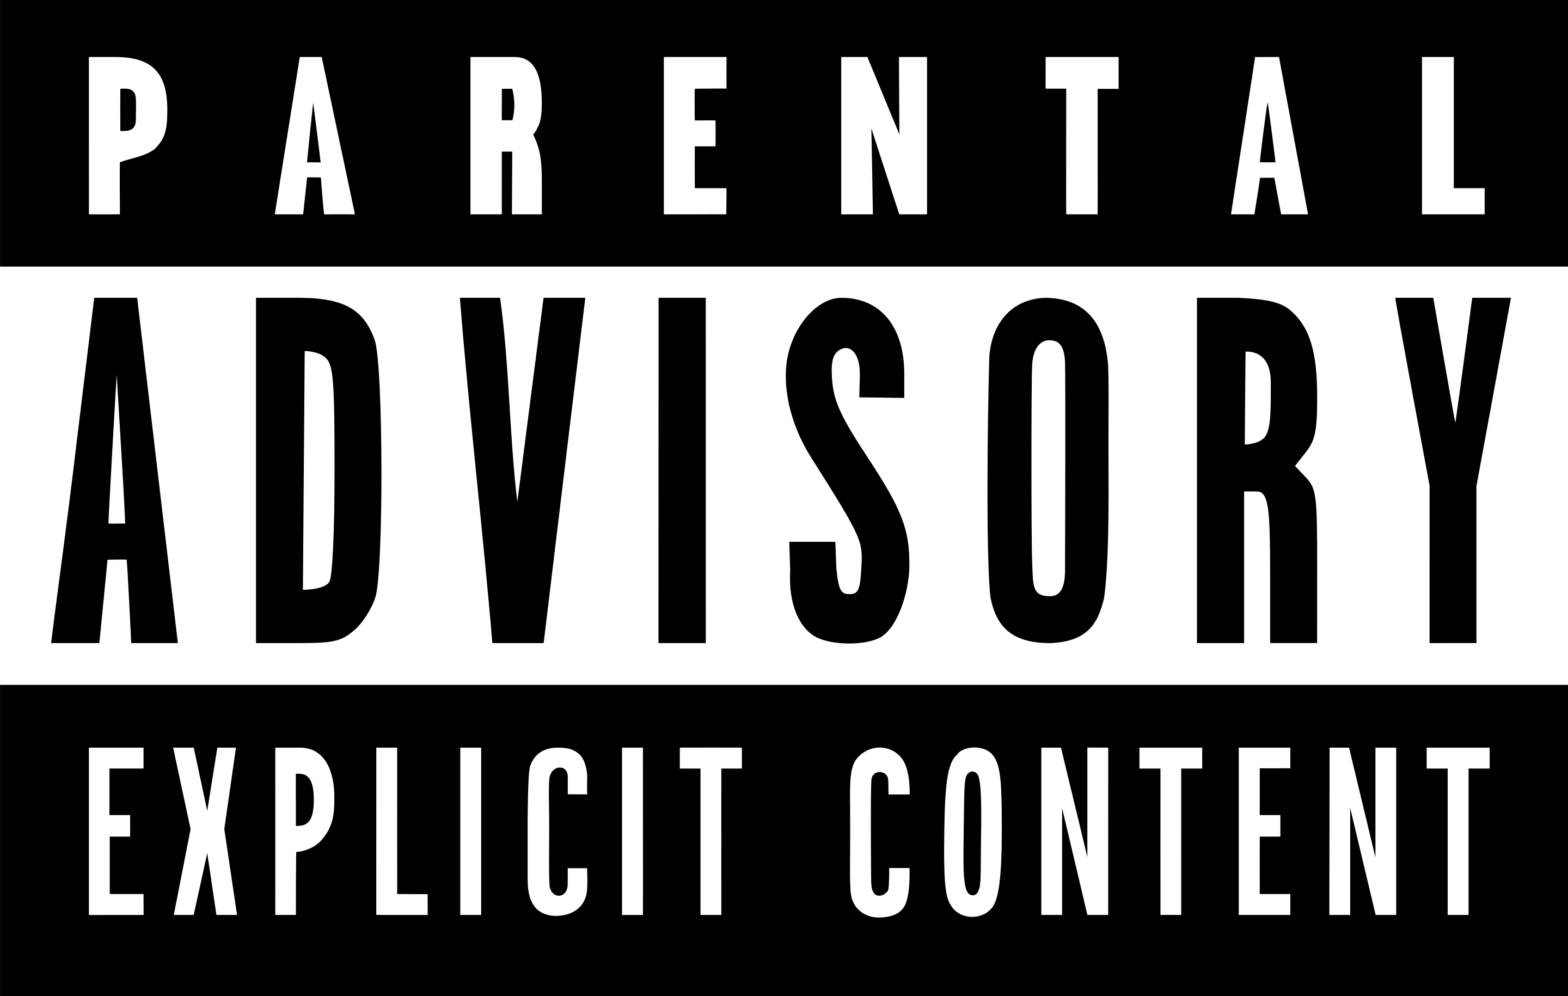 Parental Advisory: Explicit content